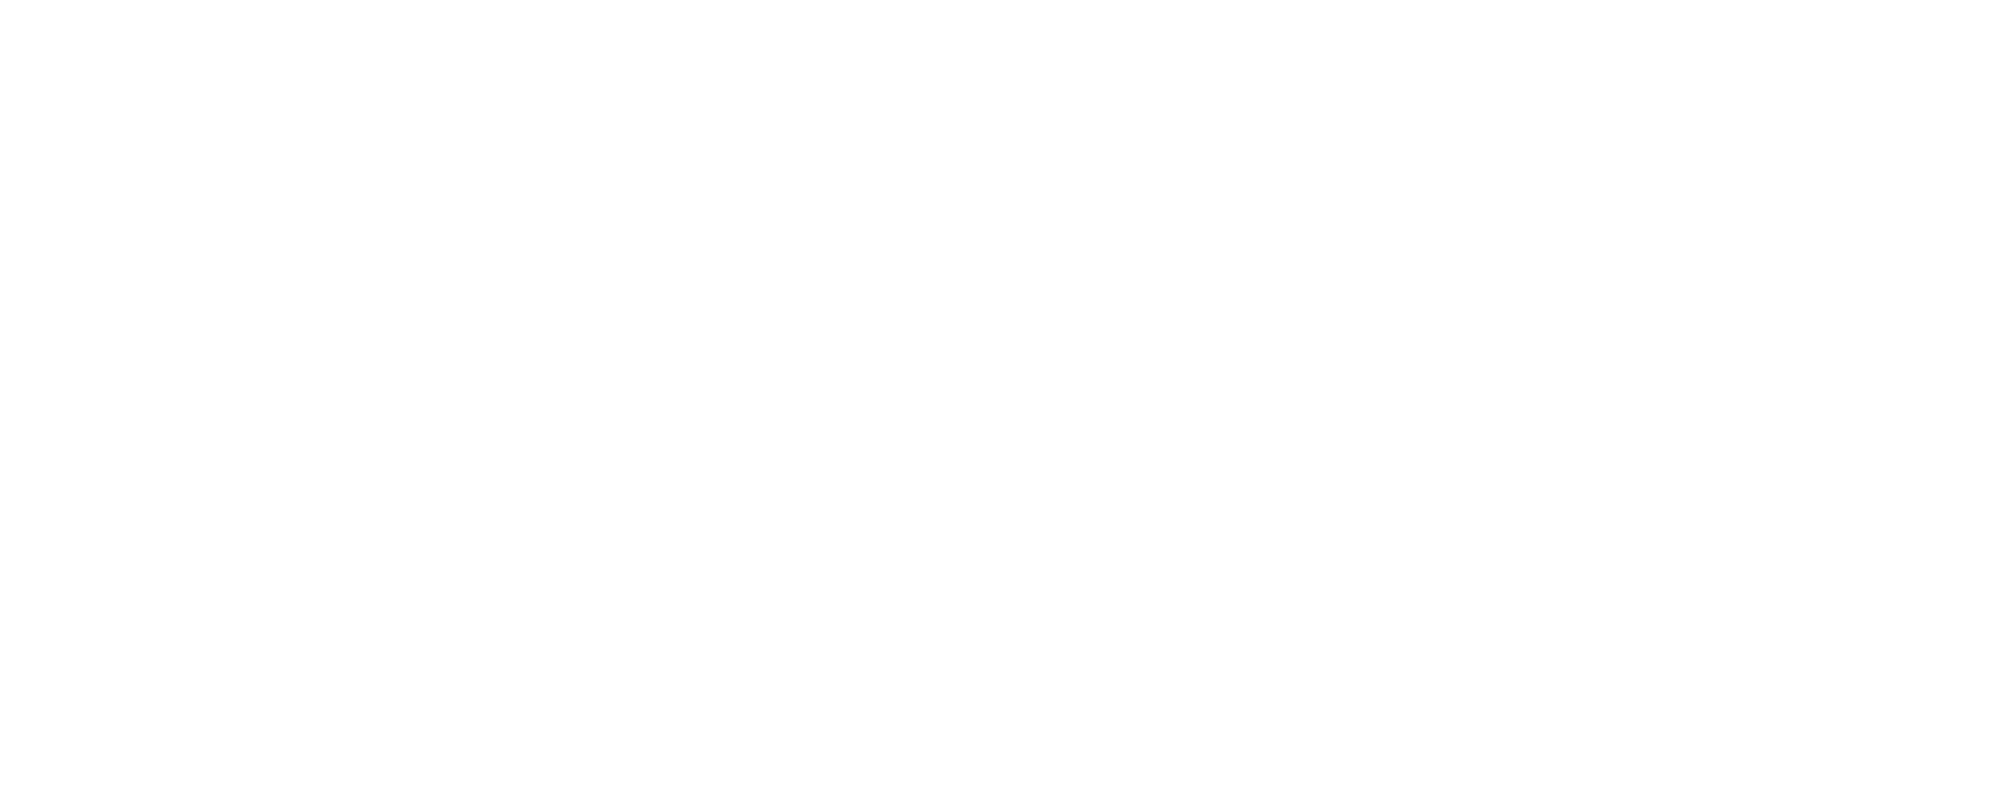 Welljob